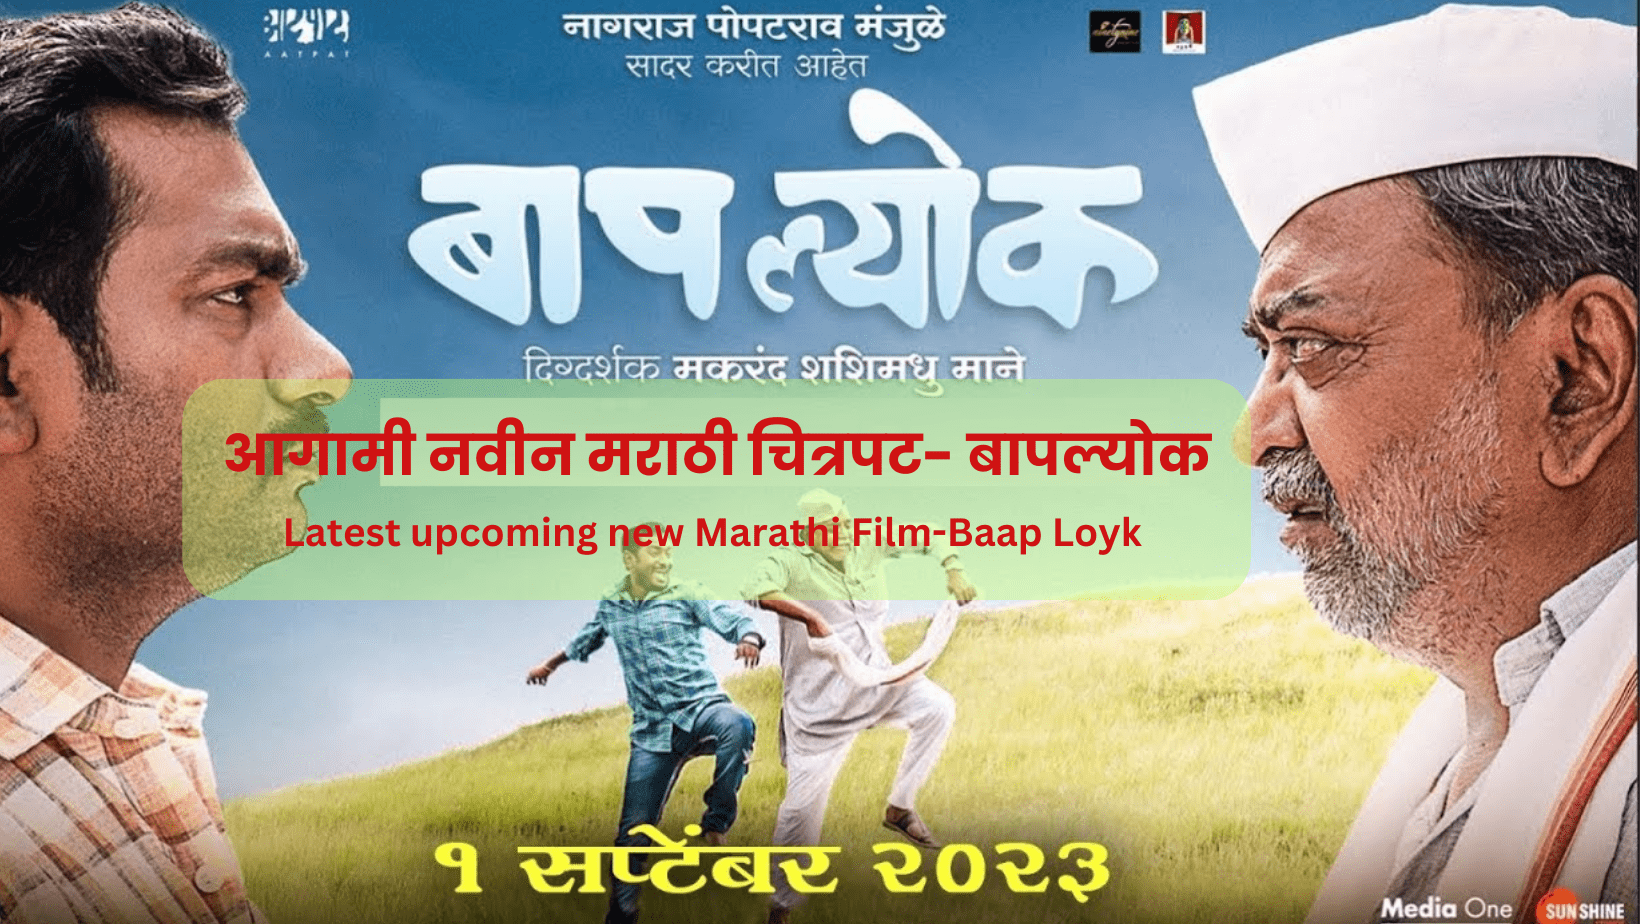 Latest Upcoming New Marathi Film-Baap Loyk